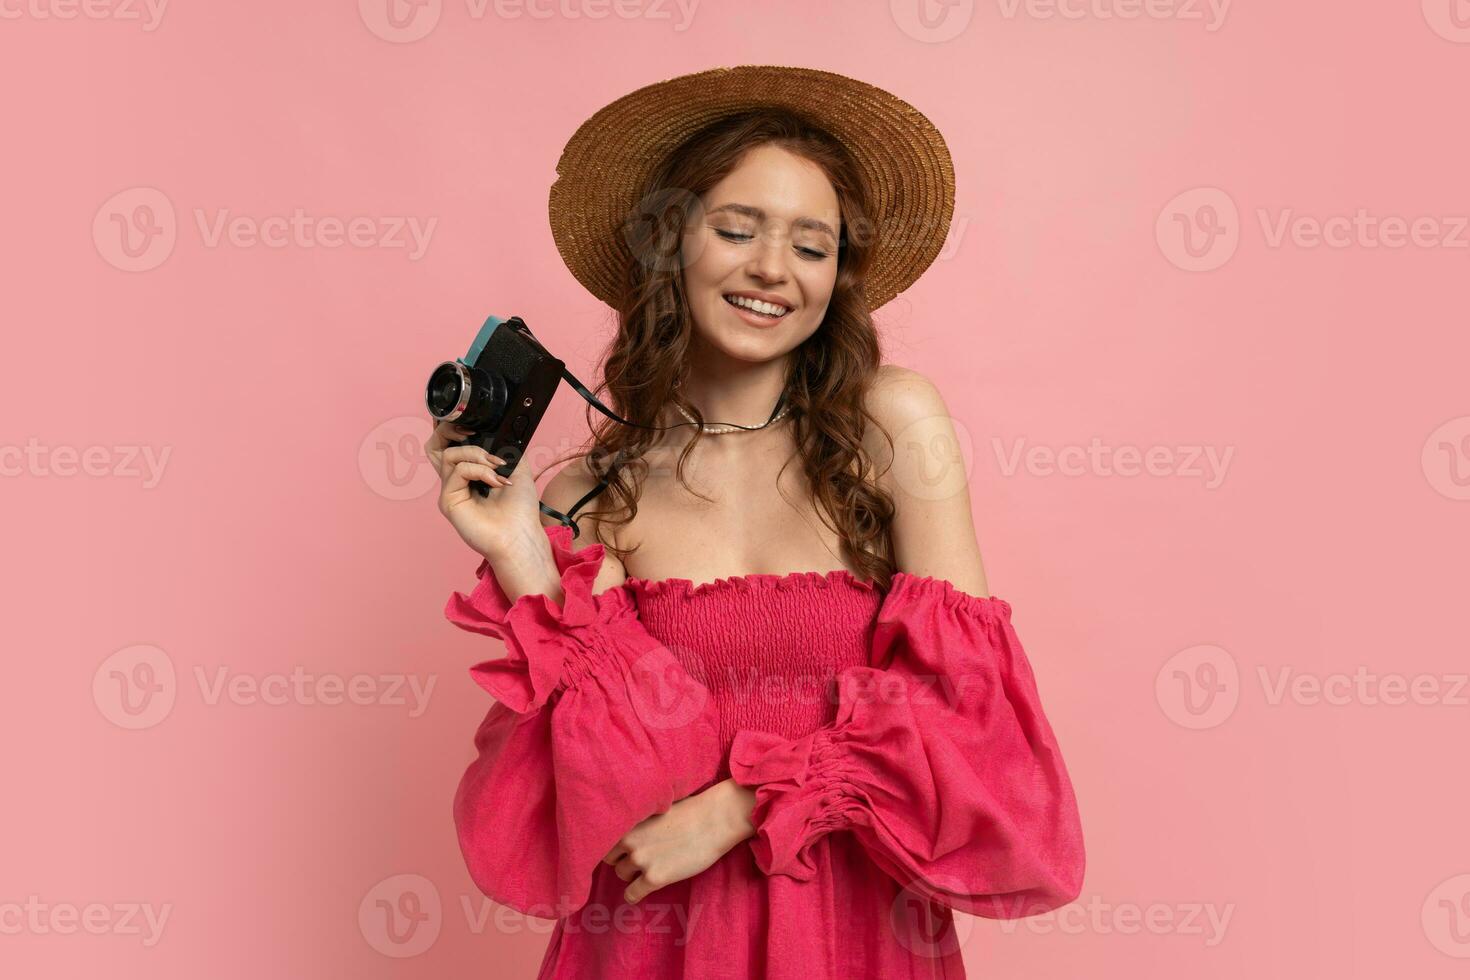 bonito rojo cabeza hembra turista con cámara. estudio Disparo de asombrado mujer participación azul retro cámara y posando terminado rosado antecedentes. foto